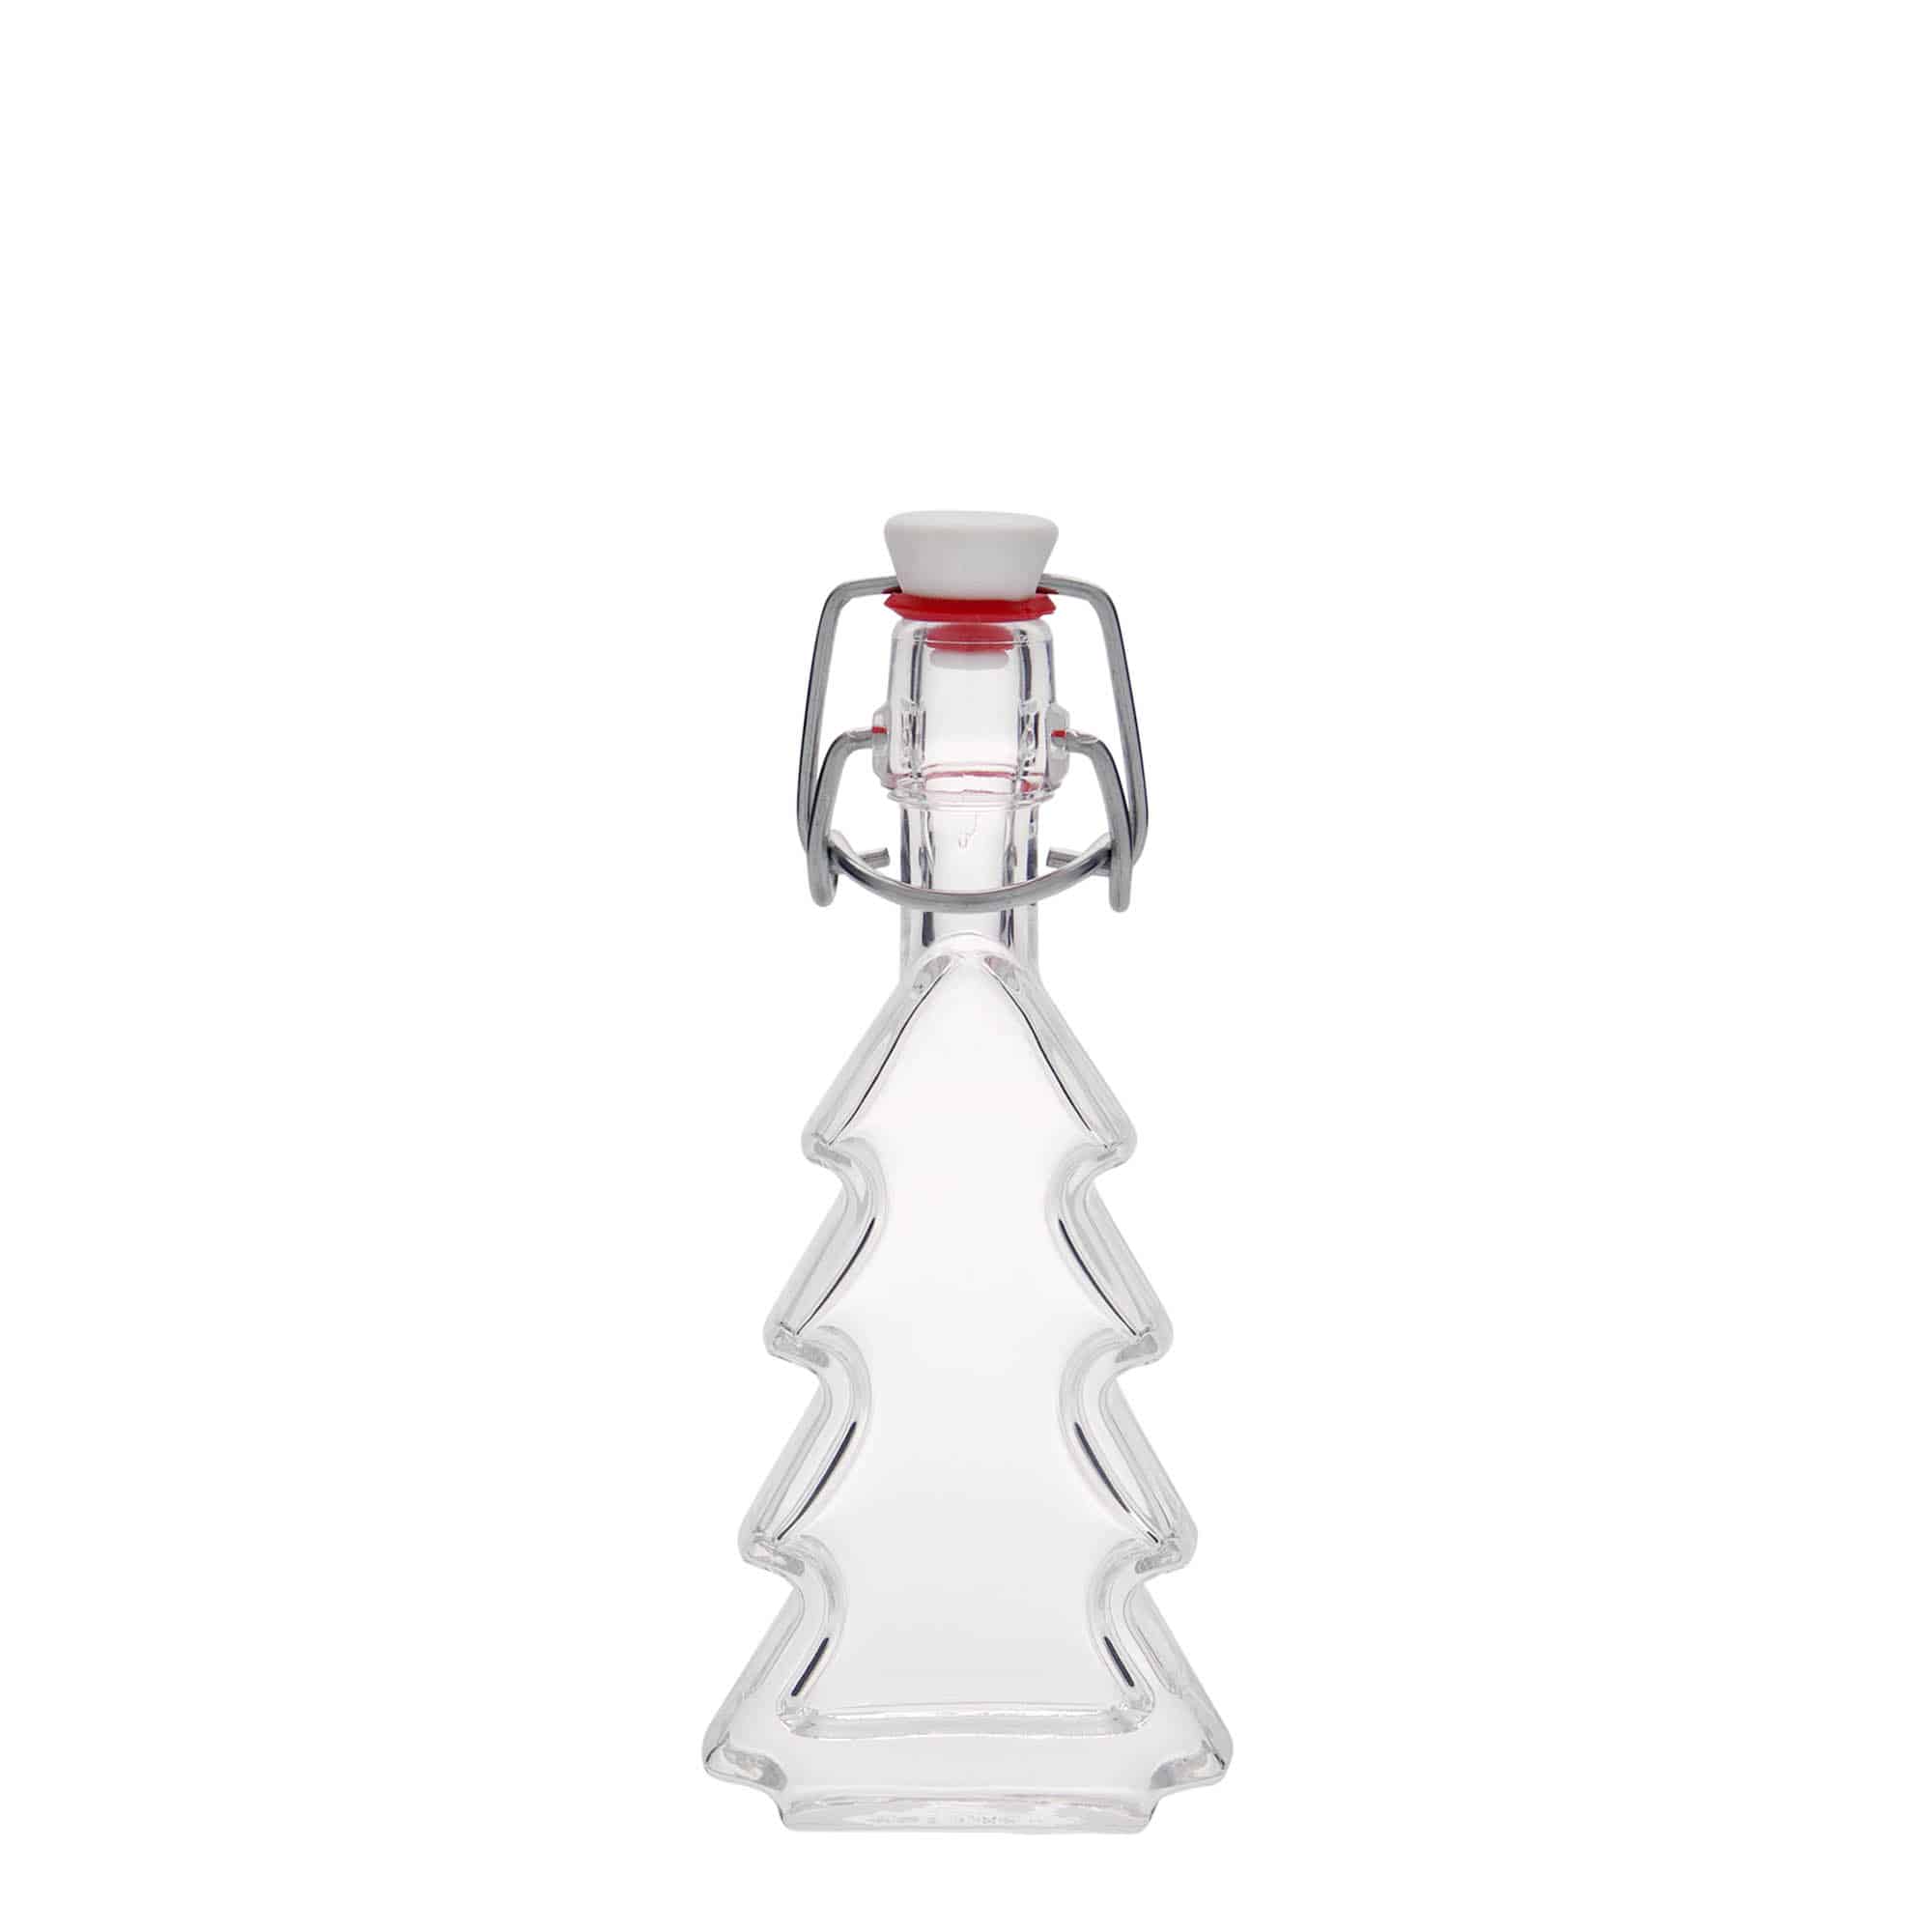 40 ml glass bottle 'Christmas Tree', closure: swing top